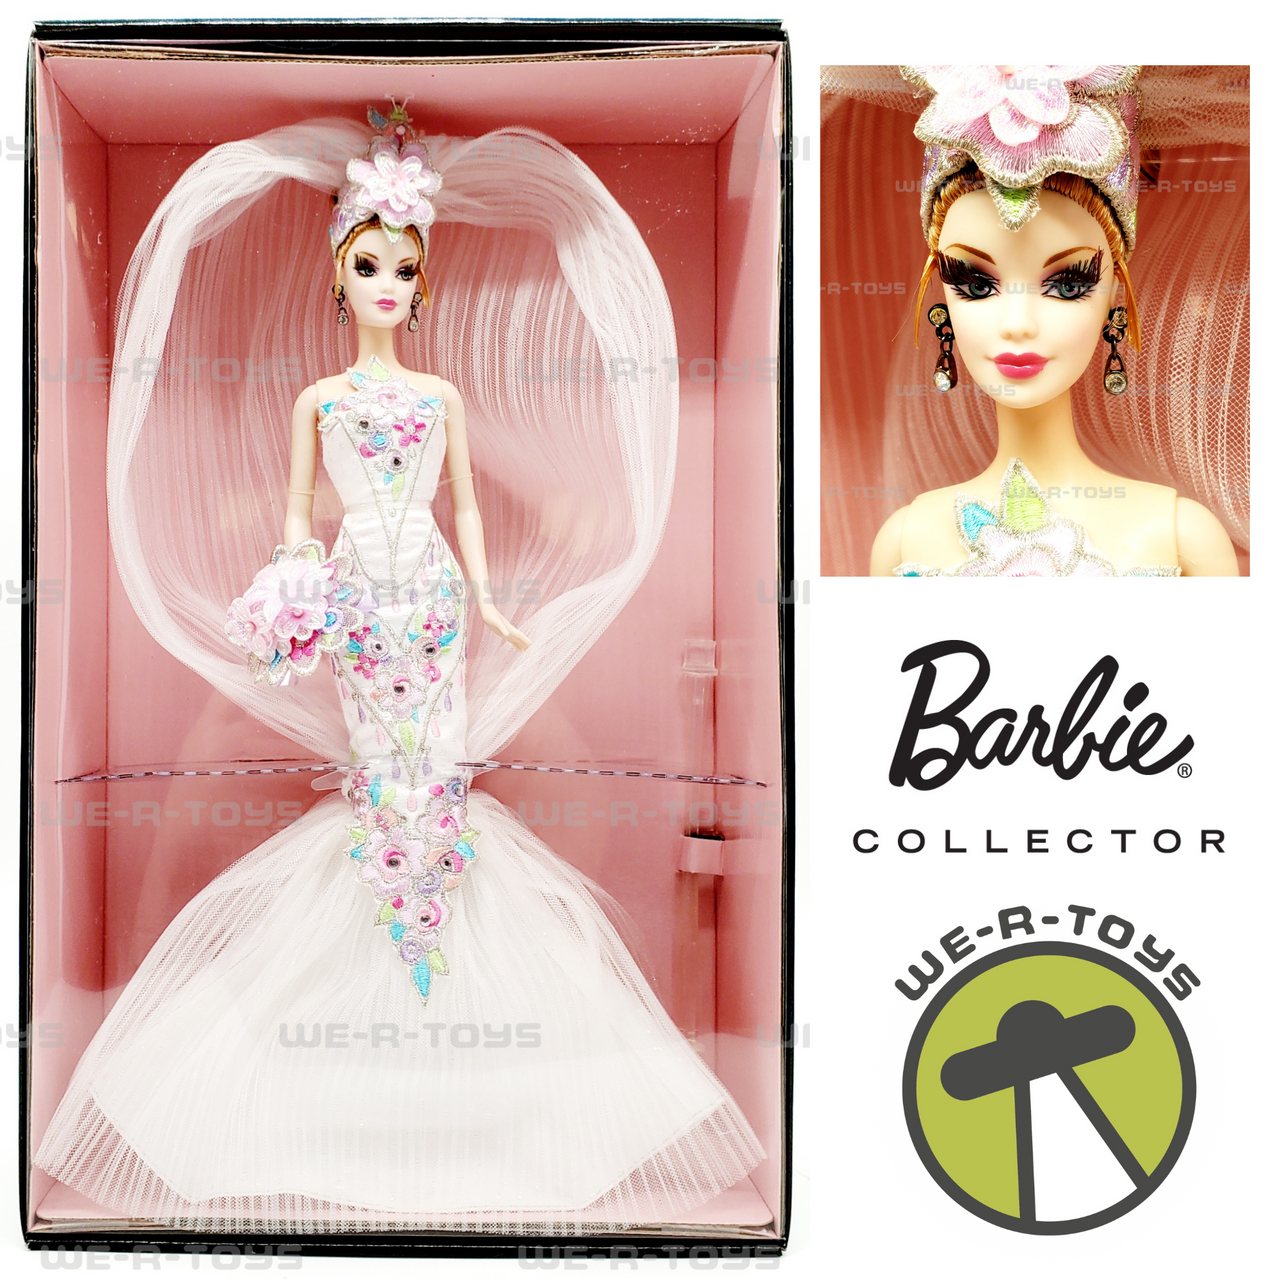 Couture Confection Bride Barbie Doll by Bob Mackie Gold Label Mattel J0981  - We-R-Toys